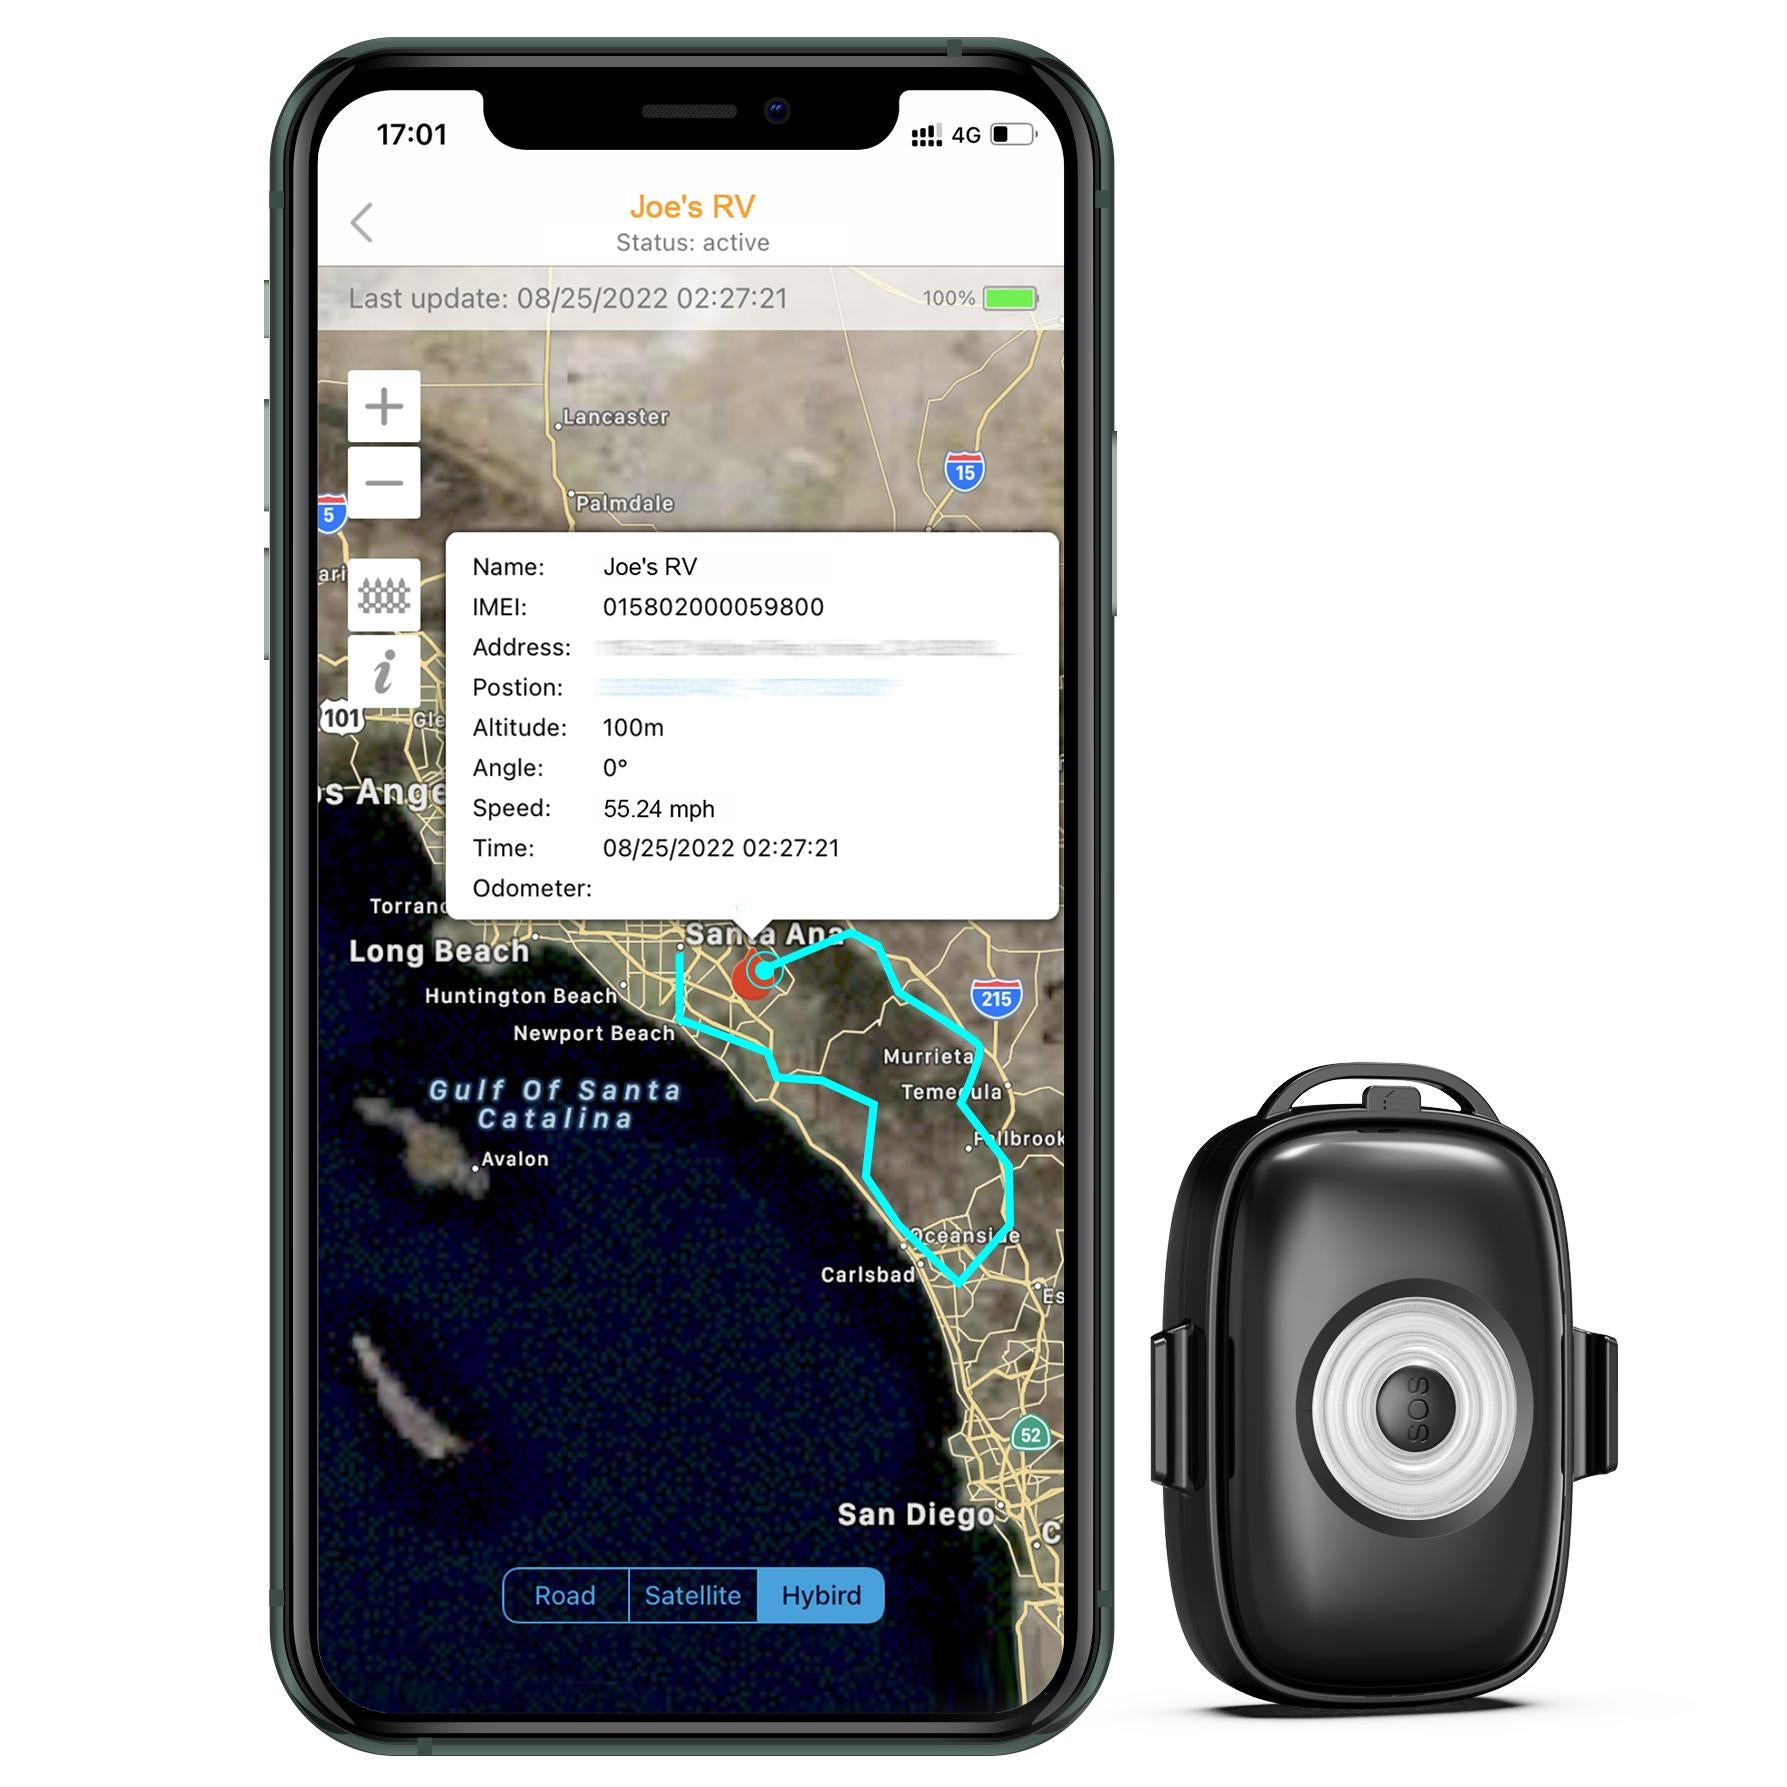 GPS tracker - locator